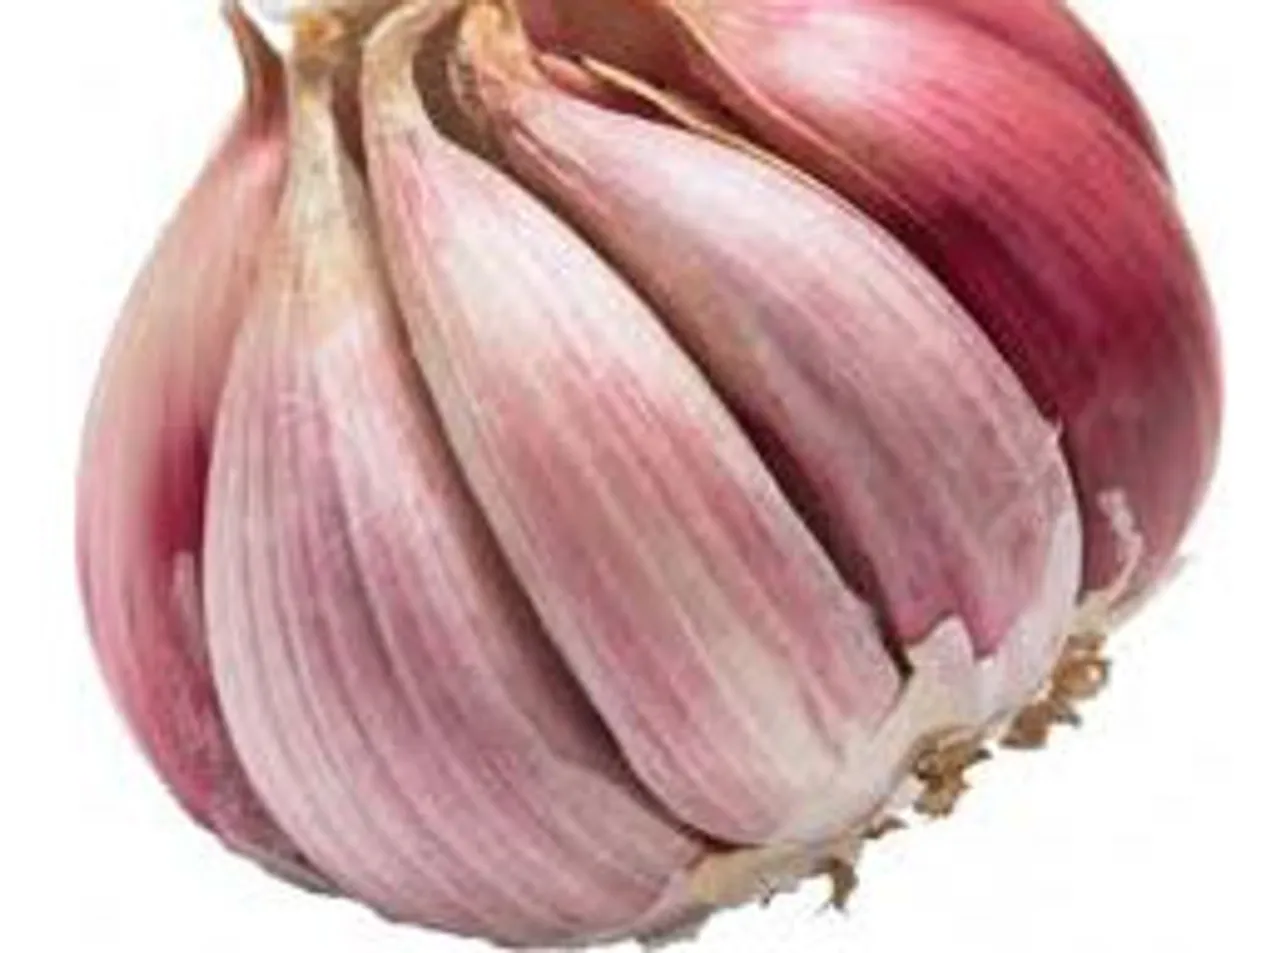 garlic the wonder food